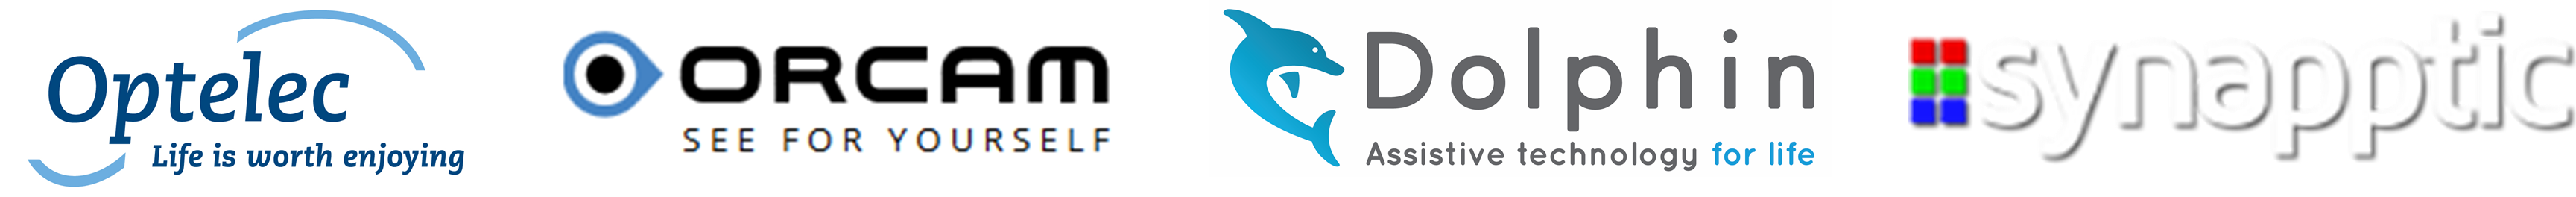 Company logos: Optelec; Orcam; Dolphin; Synapptic